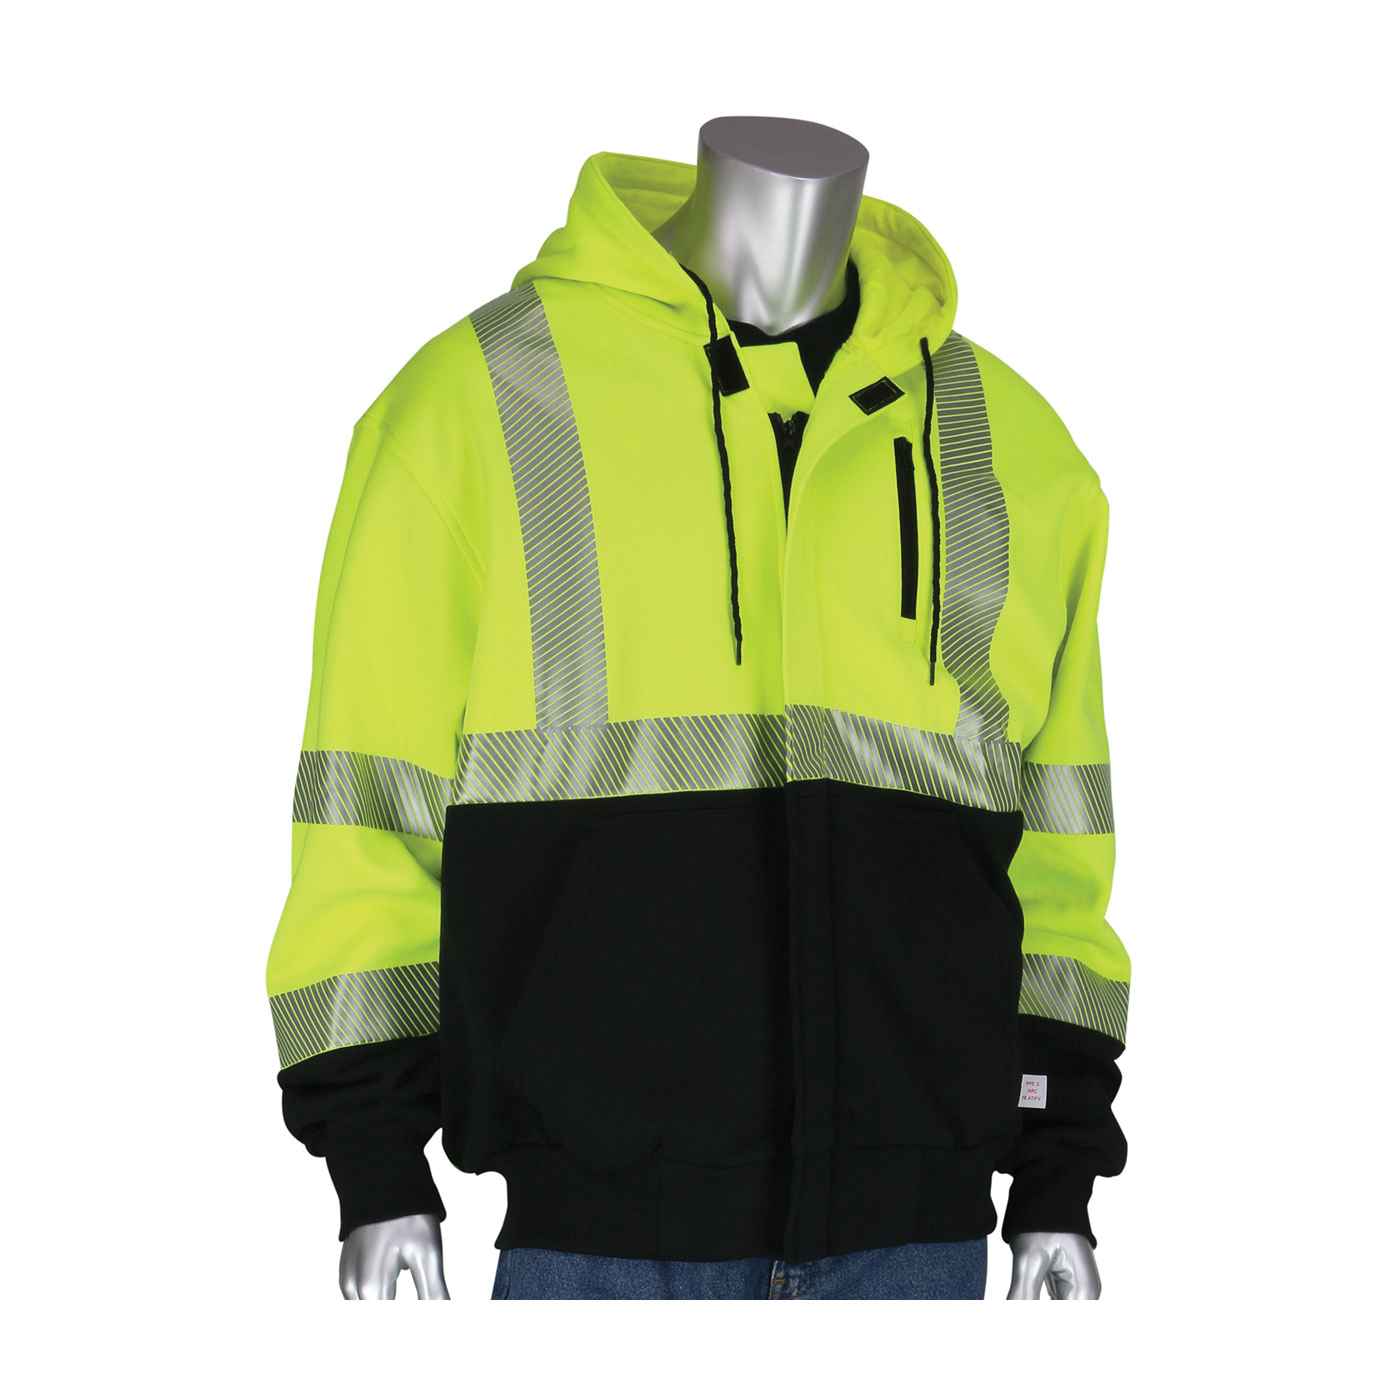 PIP® 385-1370FR-LY/XL 385-1370FR Arc and Flame Resistant Hooded Sweatshirt With Black Bottom, Unisex, XL, Hi-Viz Yellow/Black, 60% Modacrylic/40% Cotton, 30 in L